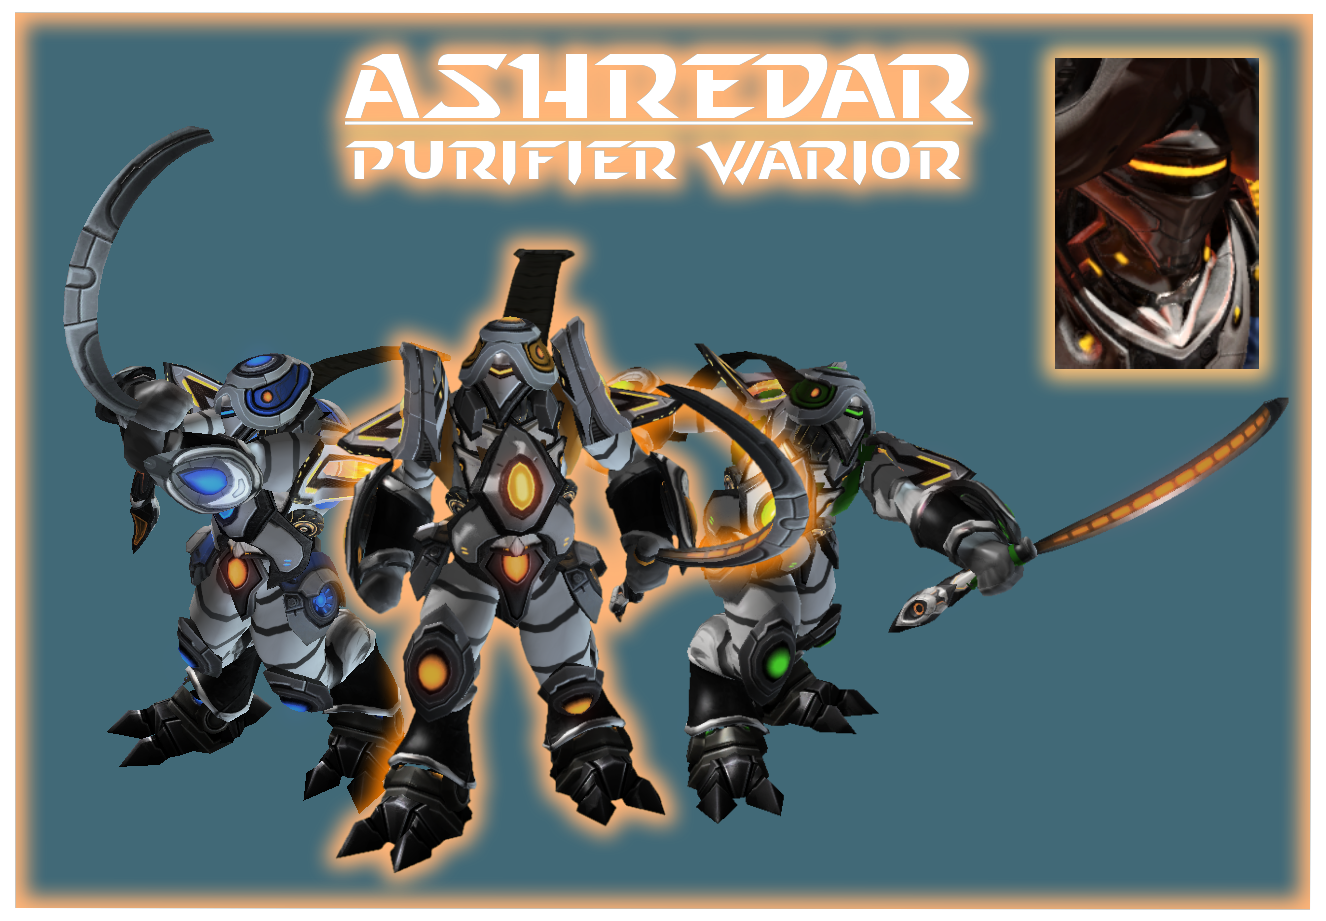 Ashredar - Purifier Warrior